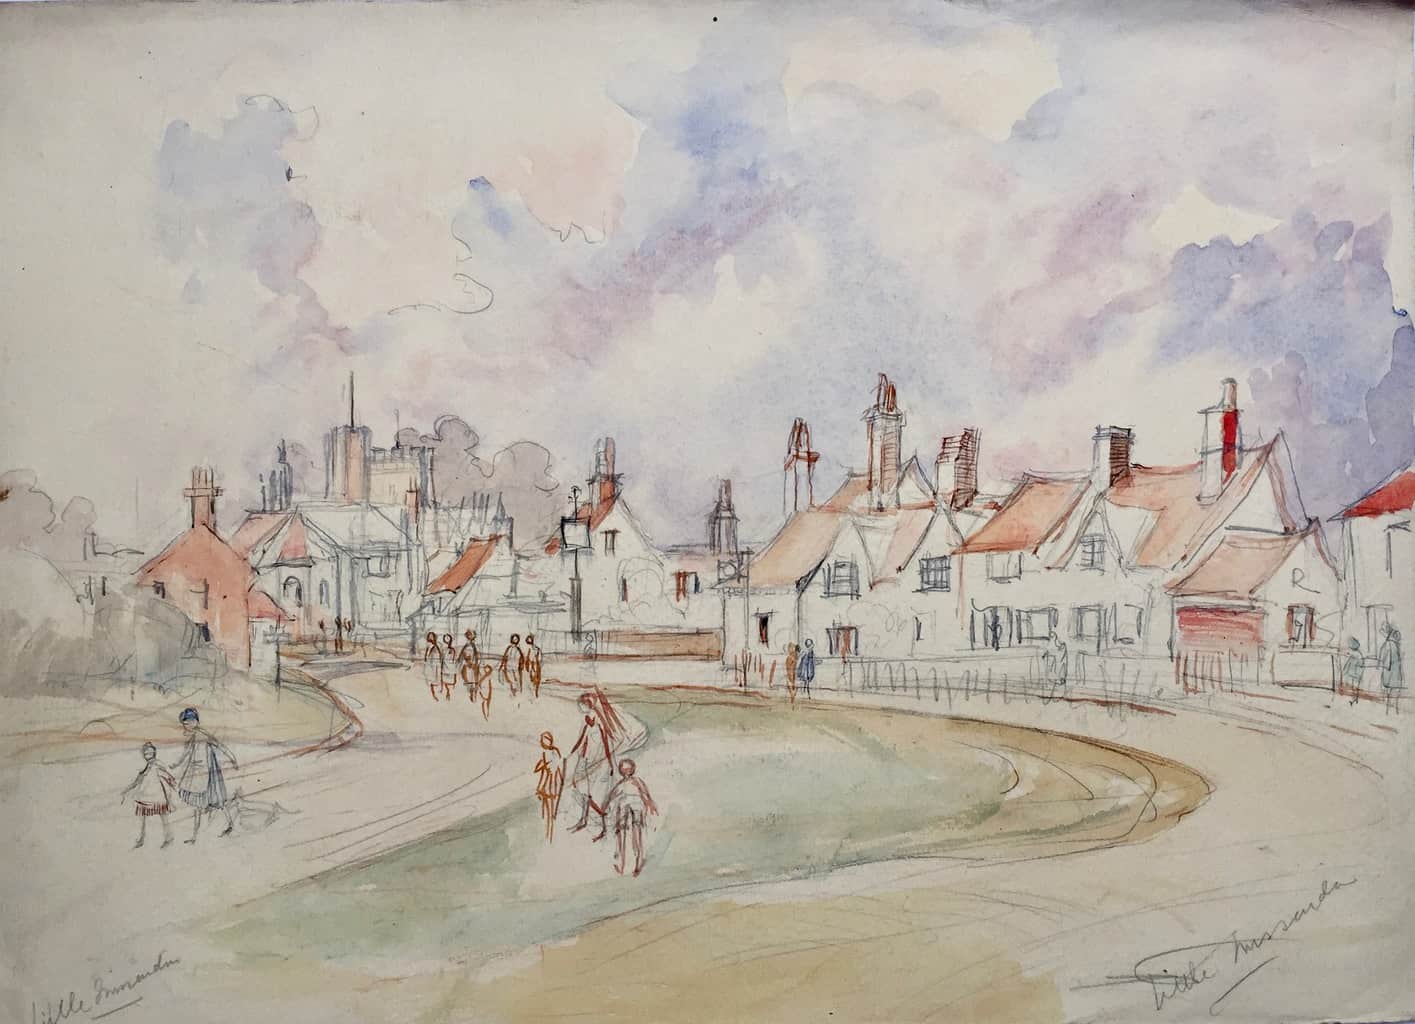 Painting of Little Missenden village